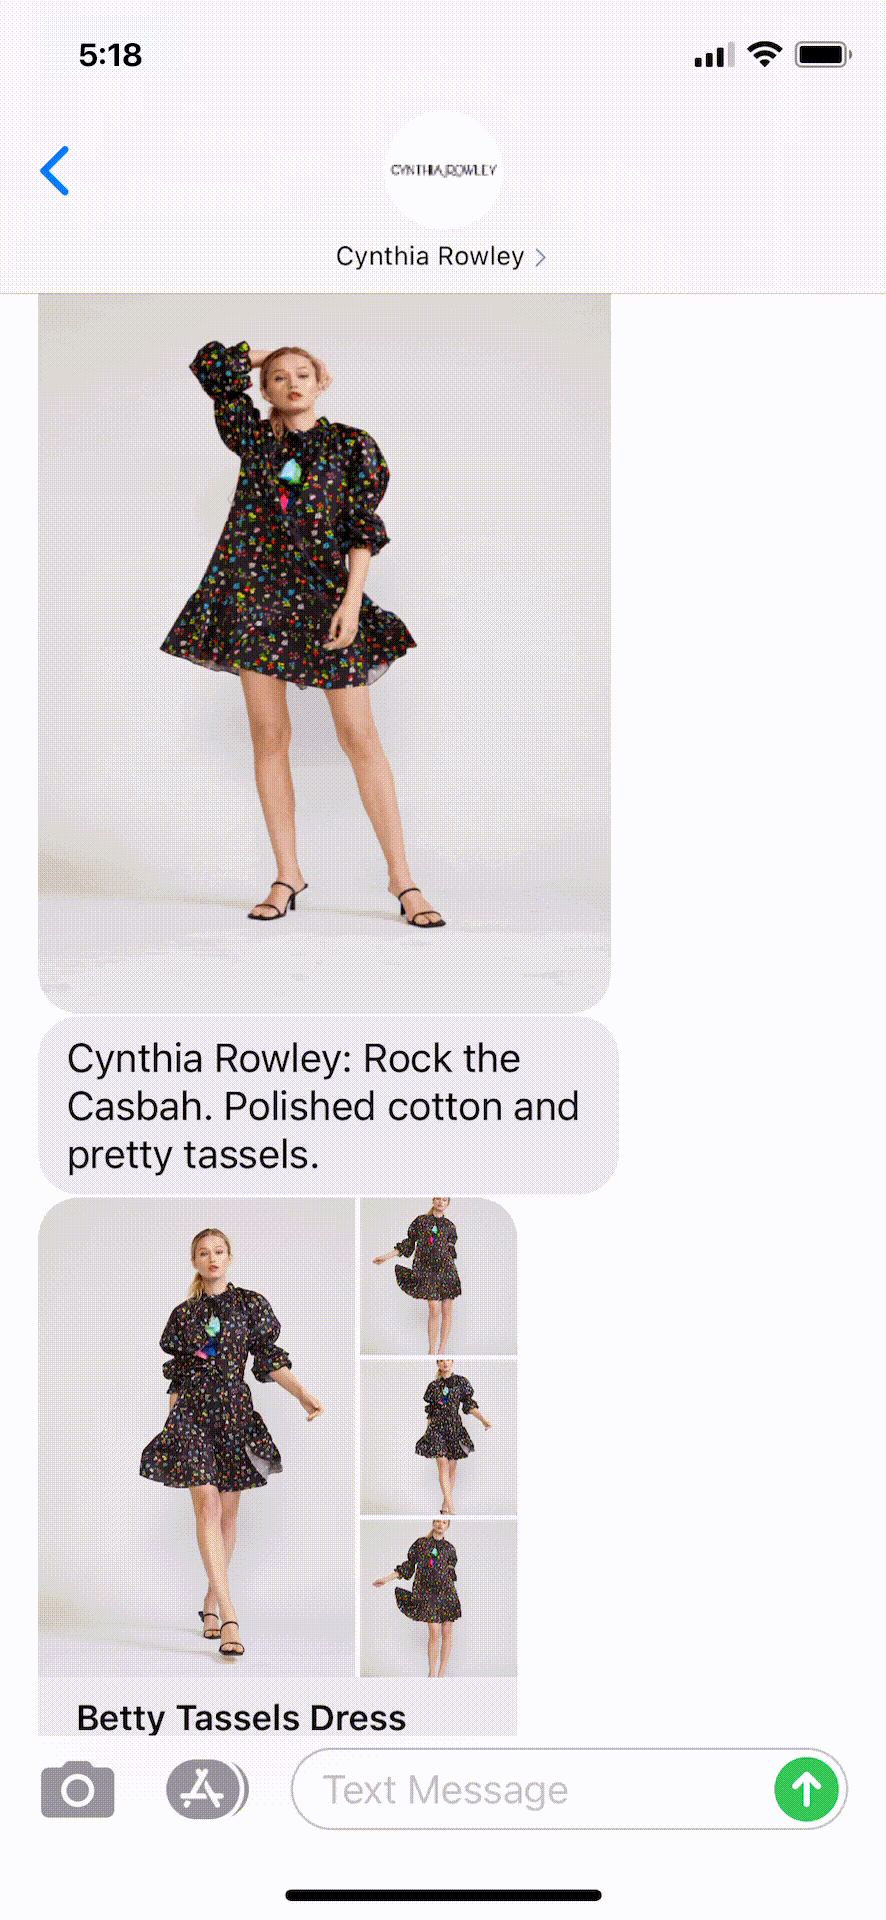 Cynthia-Rowley-Text-Message-Marketing-Example-05.15.2021